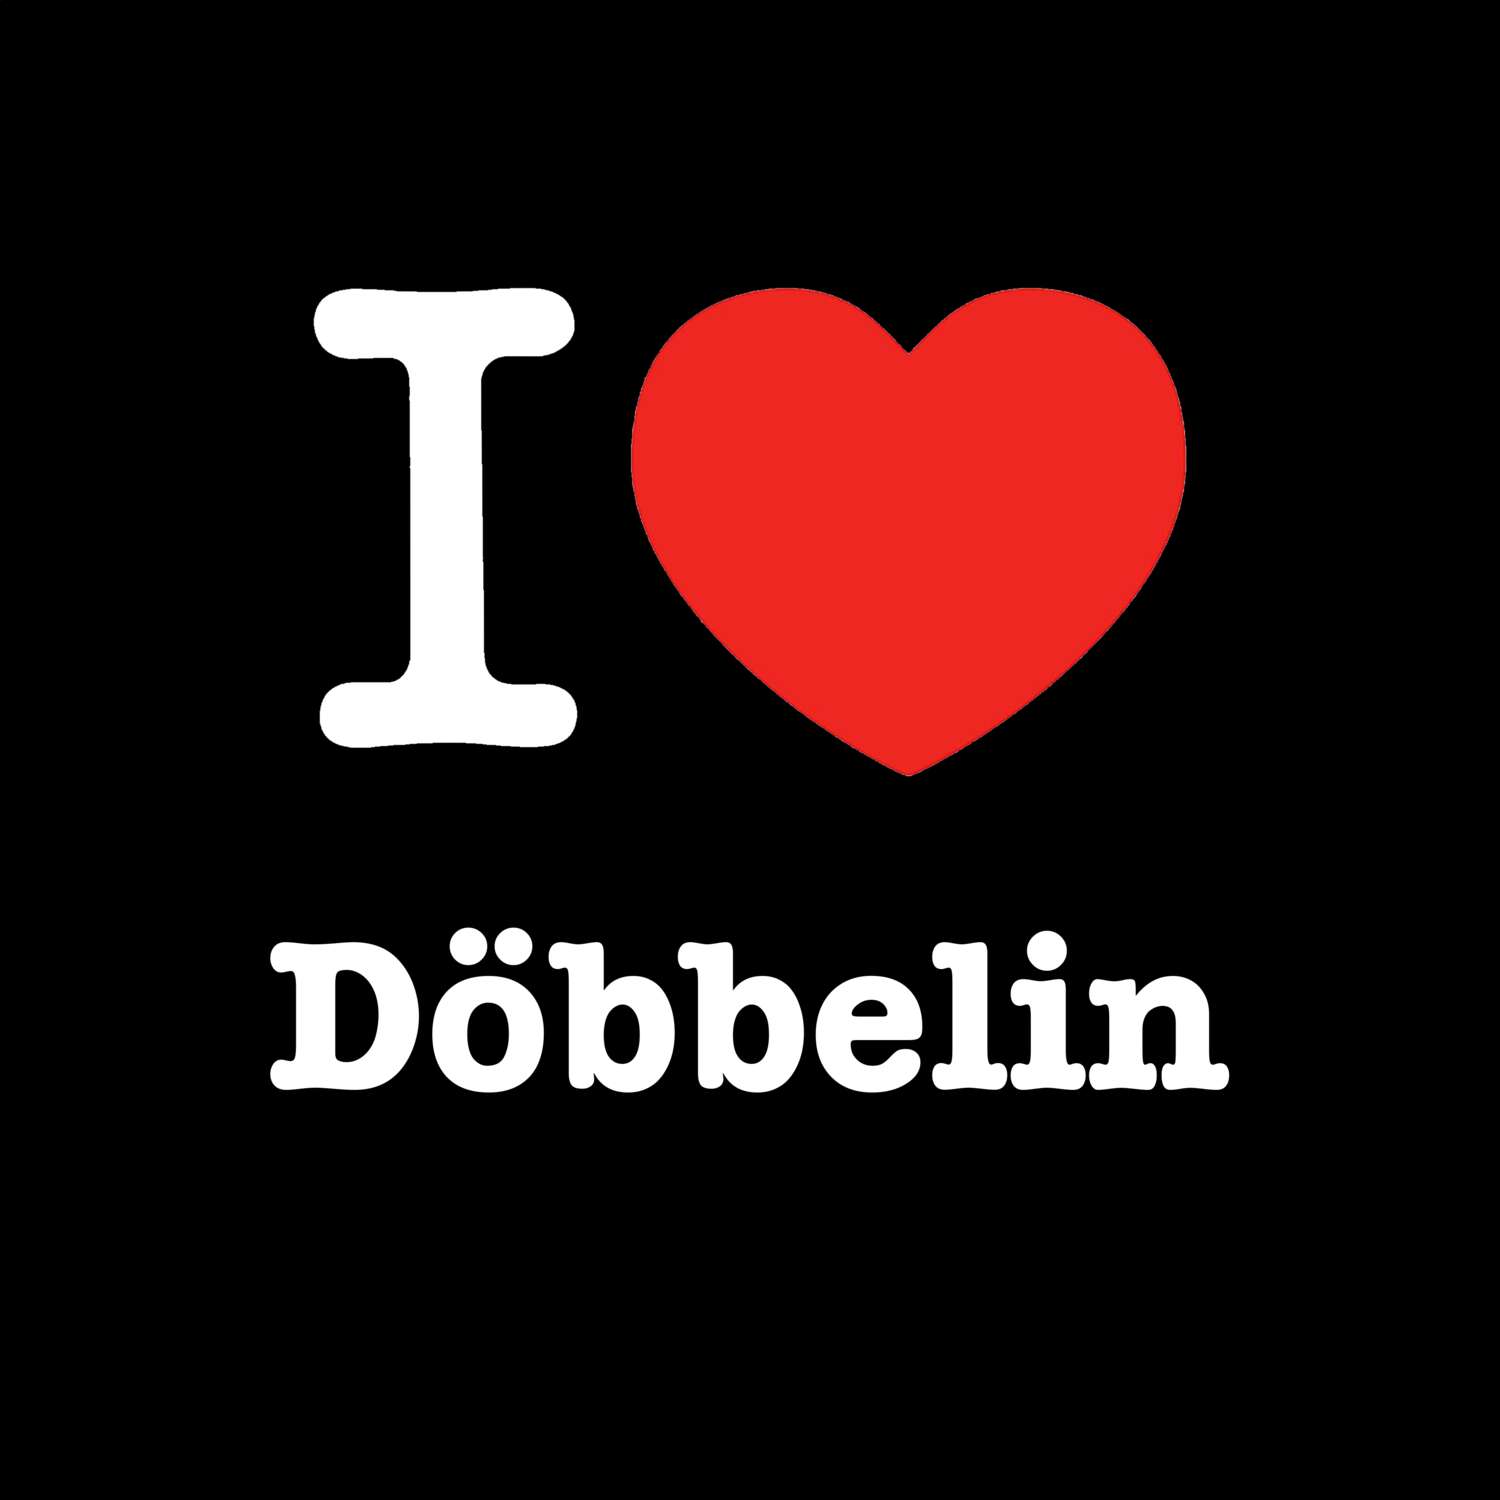 Döbbelin T-Shirt »I love«